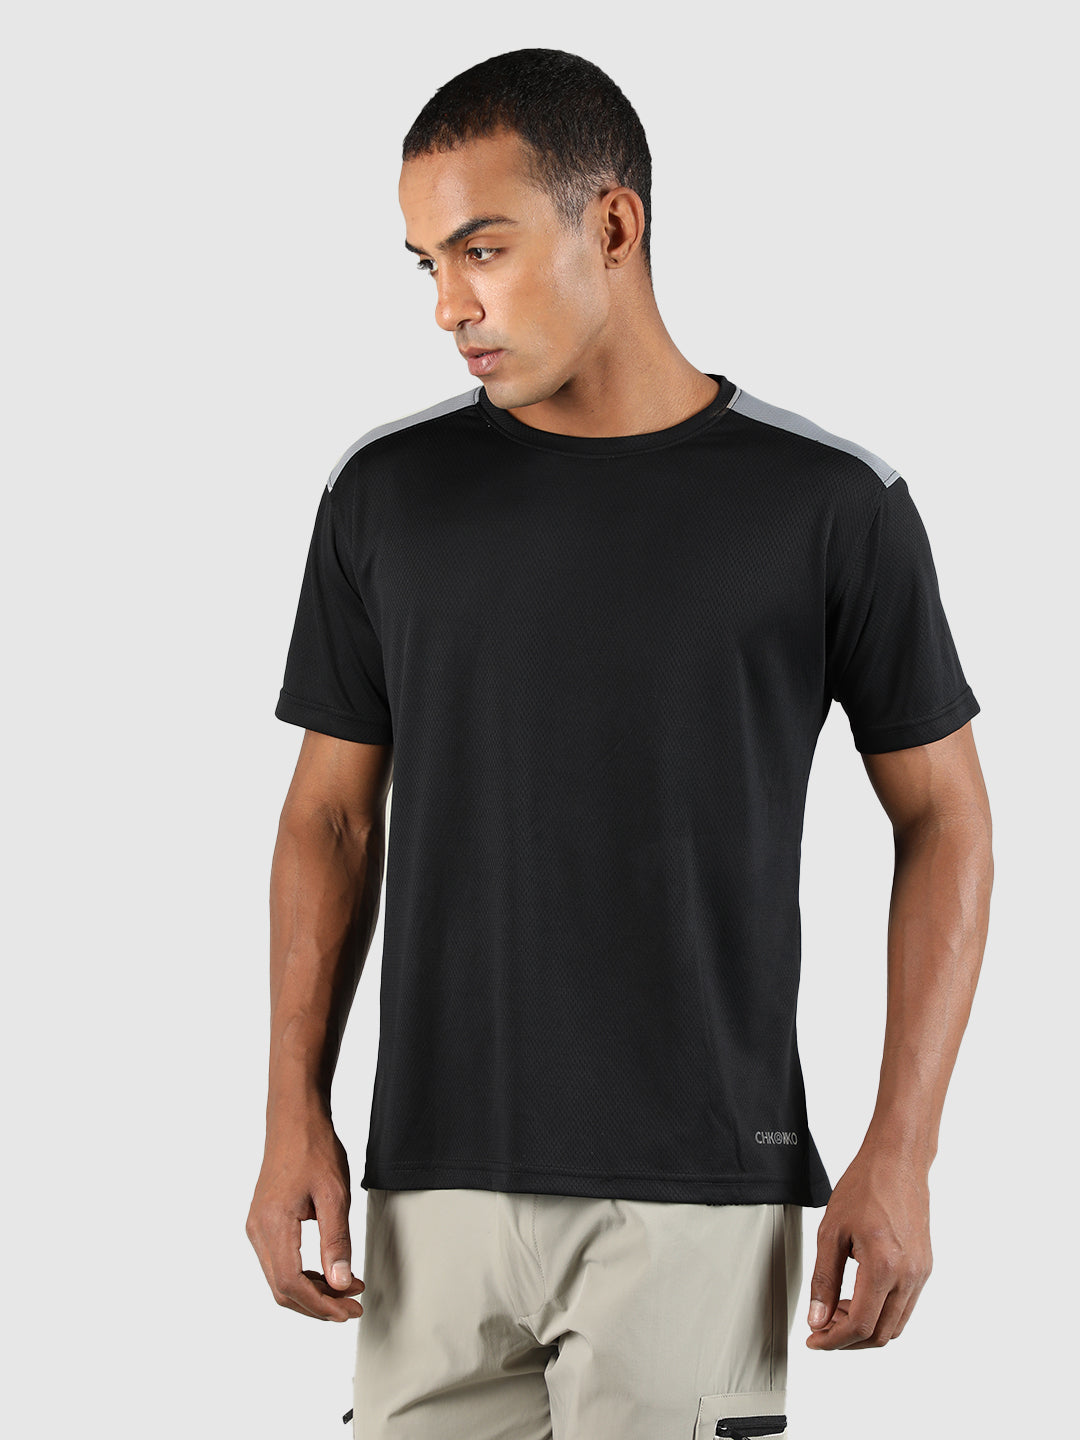 Men's Half Sleeves Sports Gym T-Shirt